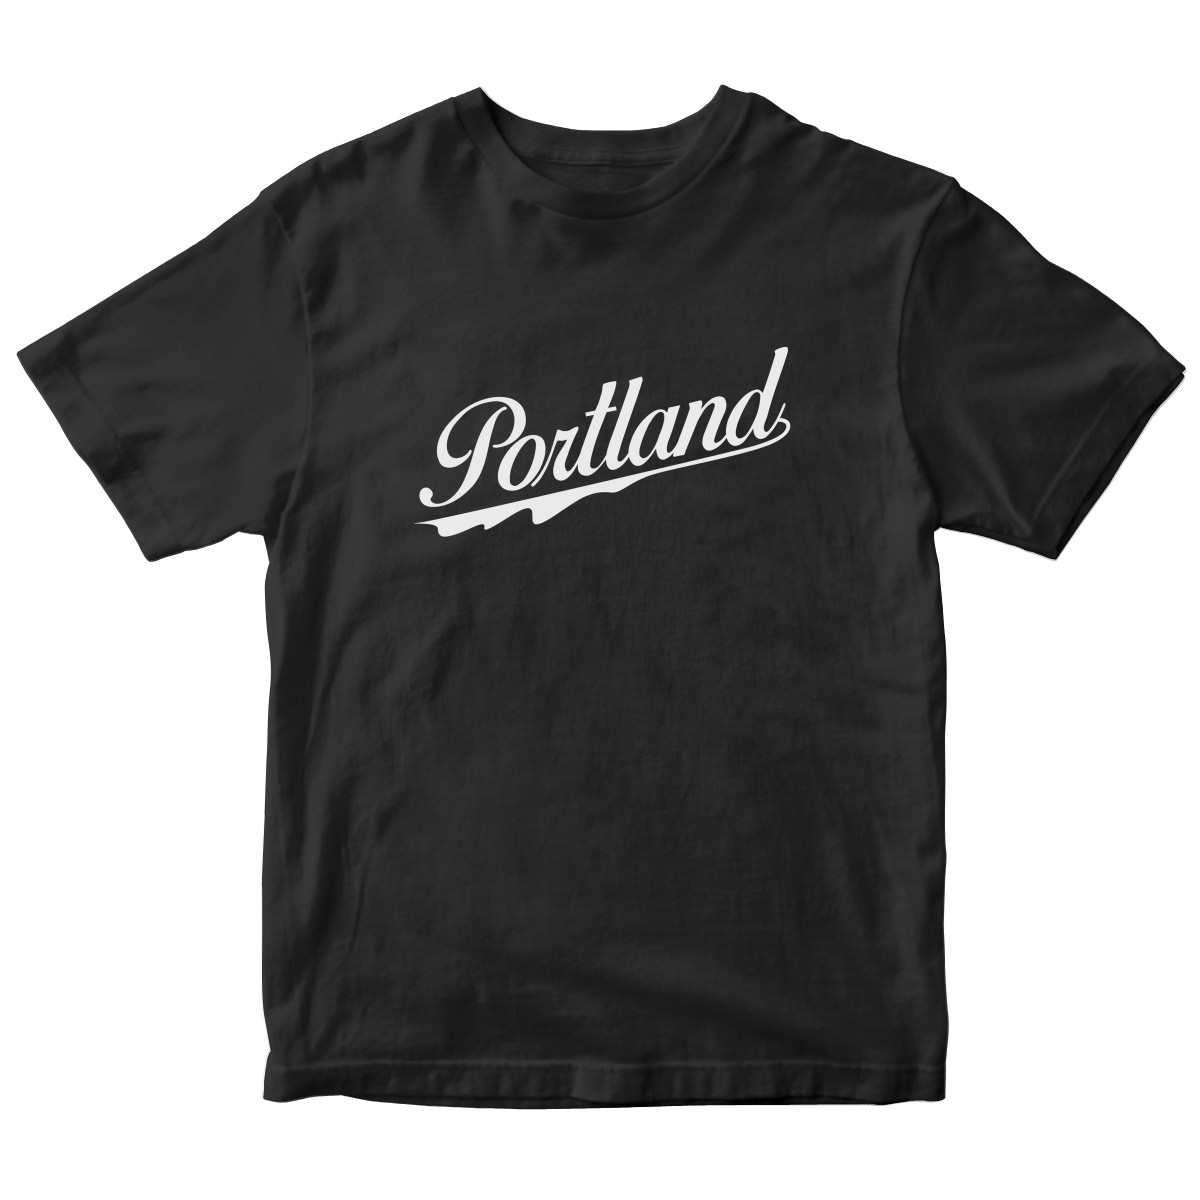 Portland Kids T-shirt | Black